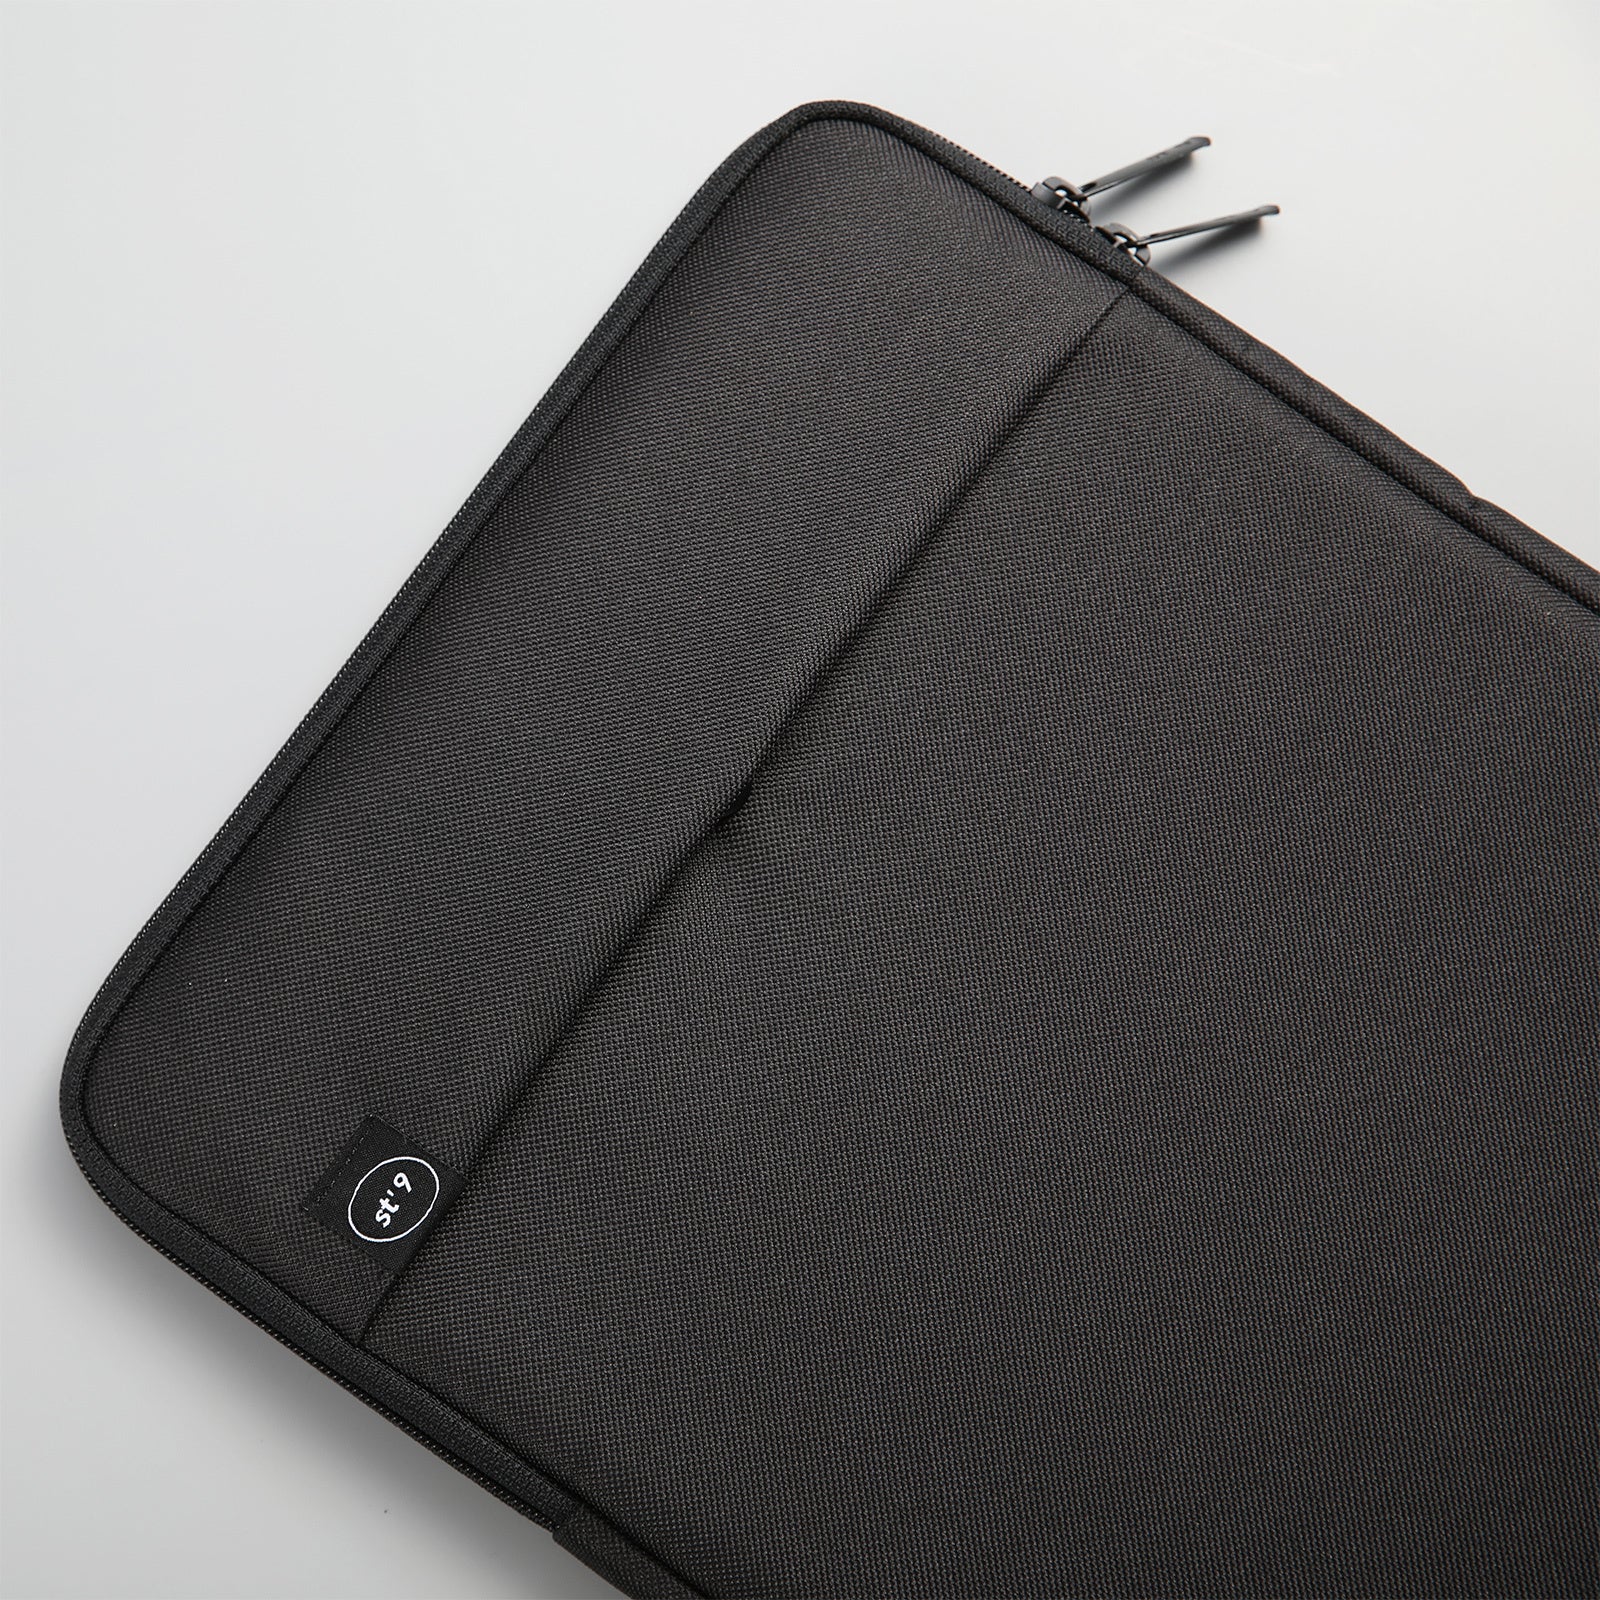 ST'9 L size 15 inch Black Laptop Sleeve Padded Travel Carry Case Bag LUKE